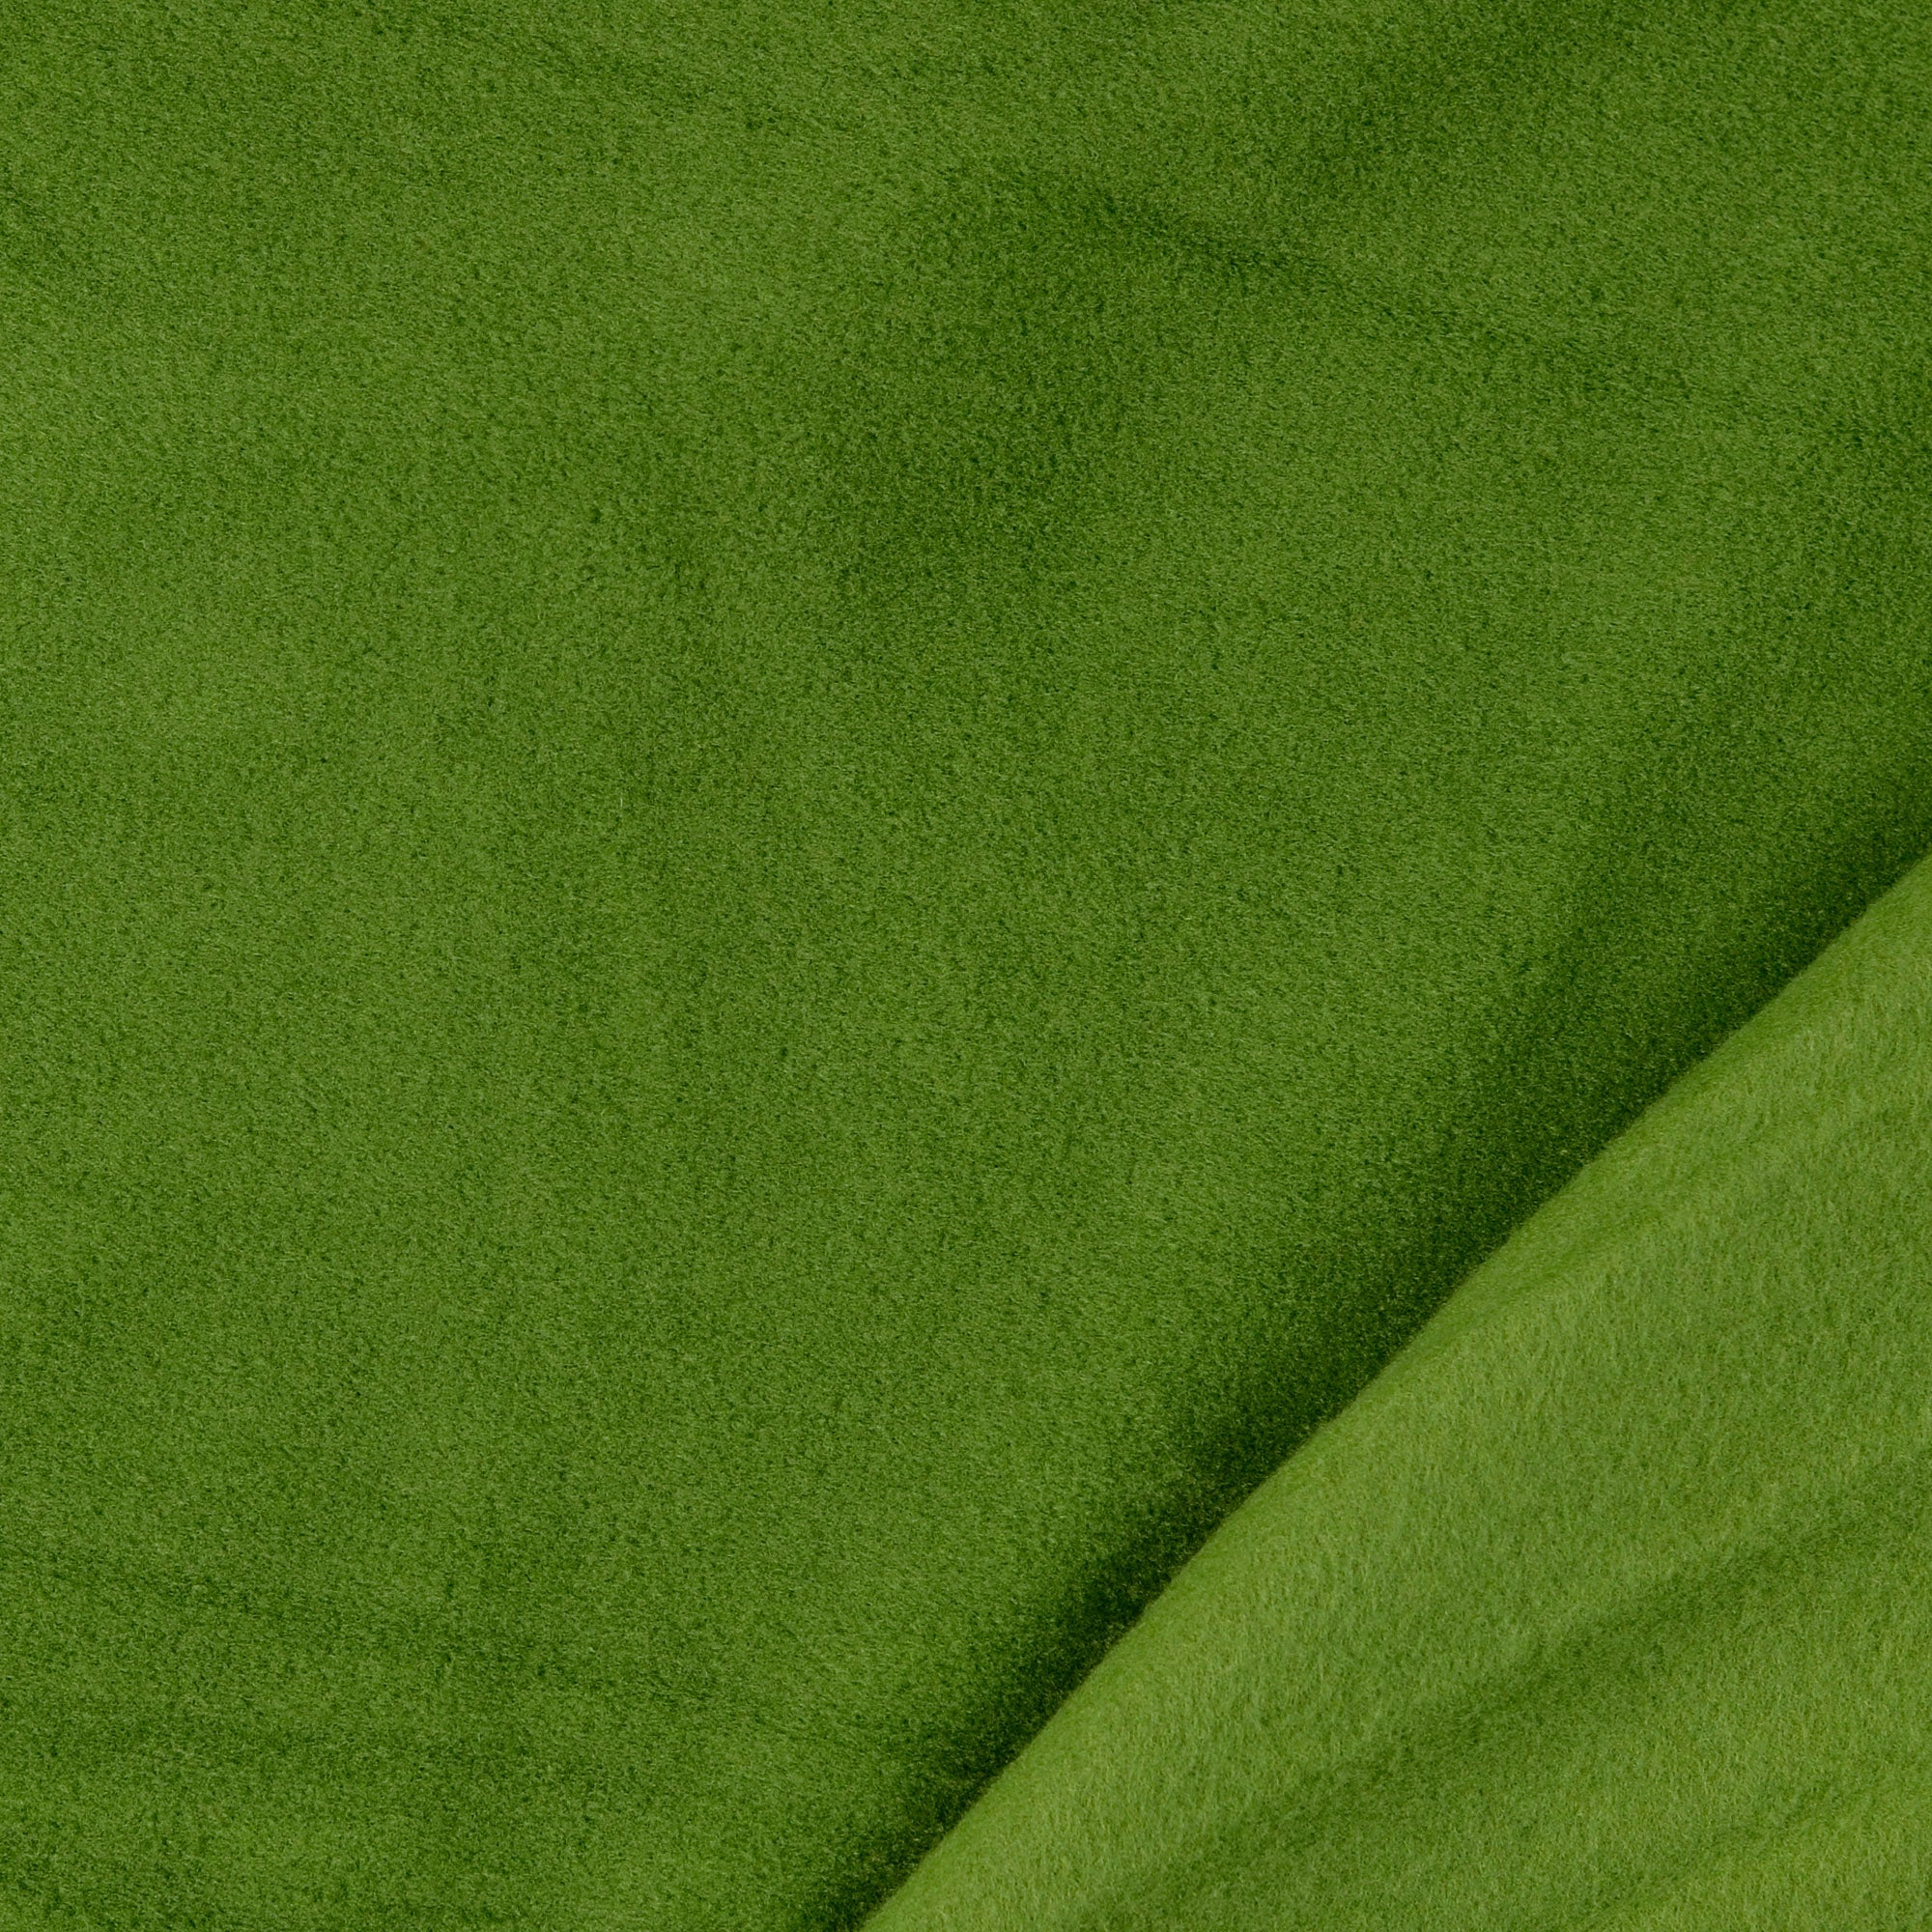 Cuddle Ultra Soft Viscose Fleece in Ivy Green